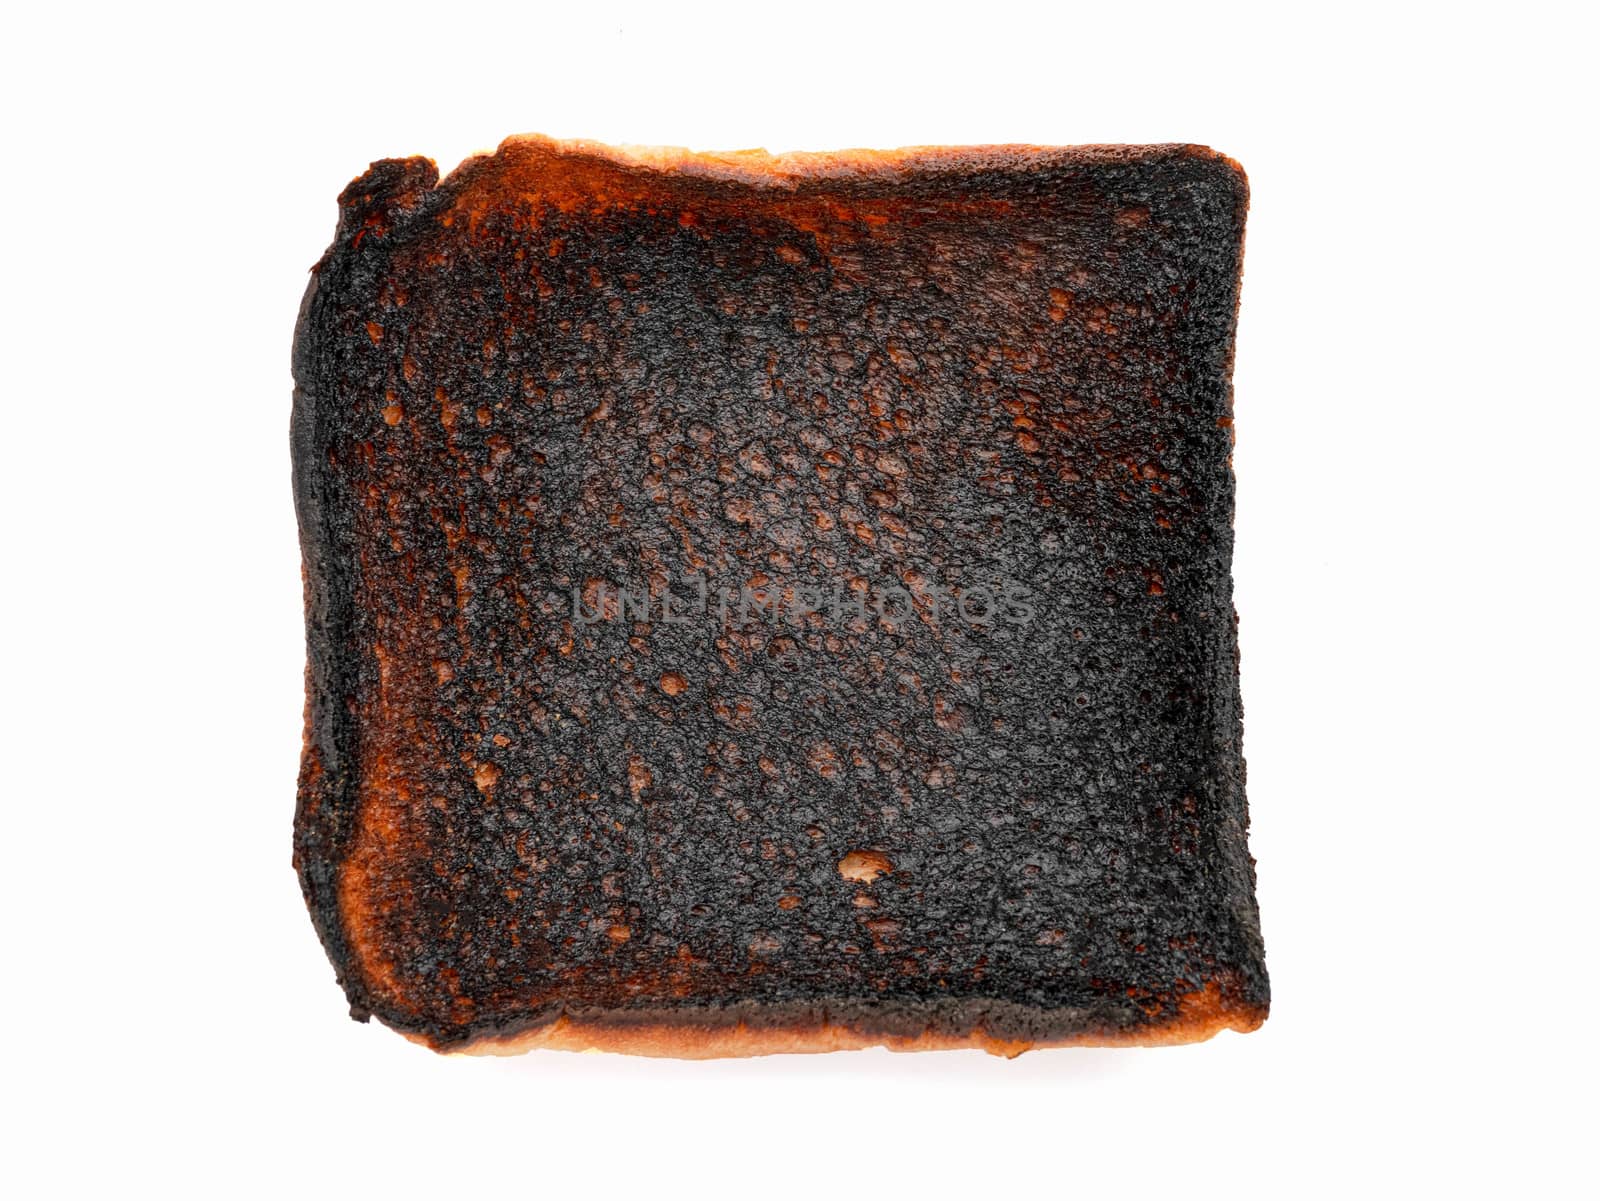 Burnt toast bread slice isolated on white background. by TEERASAK